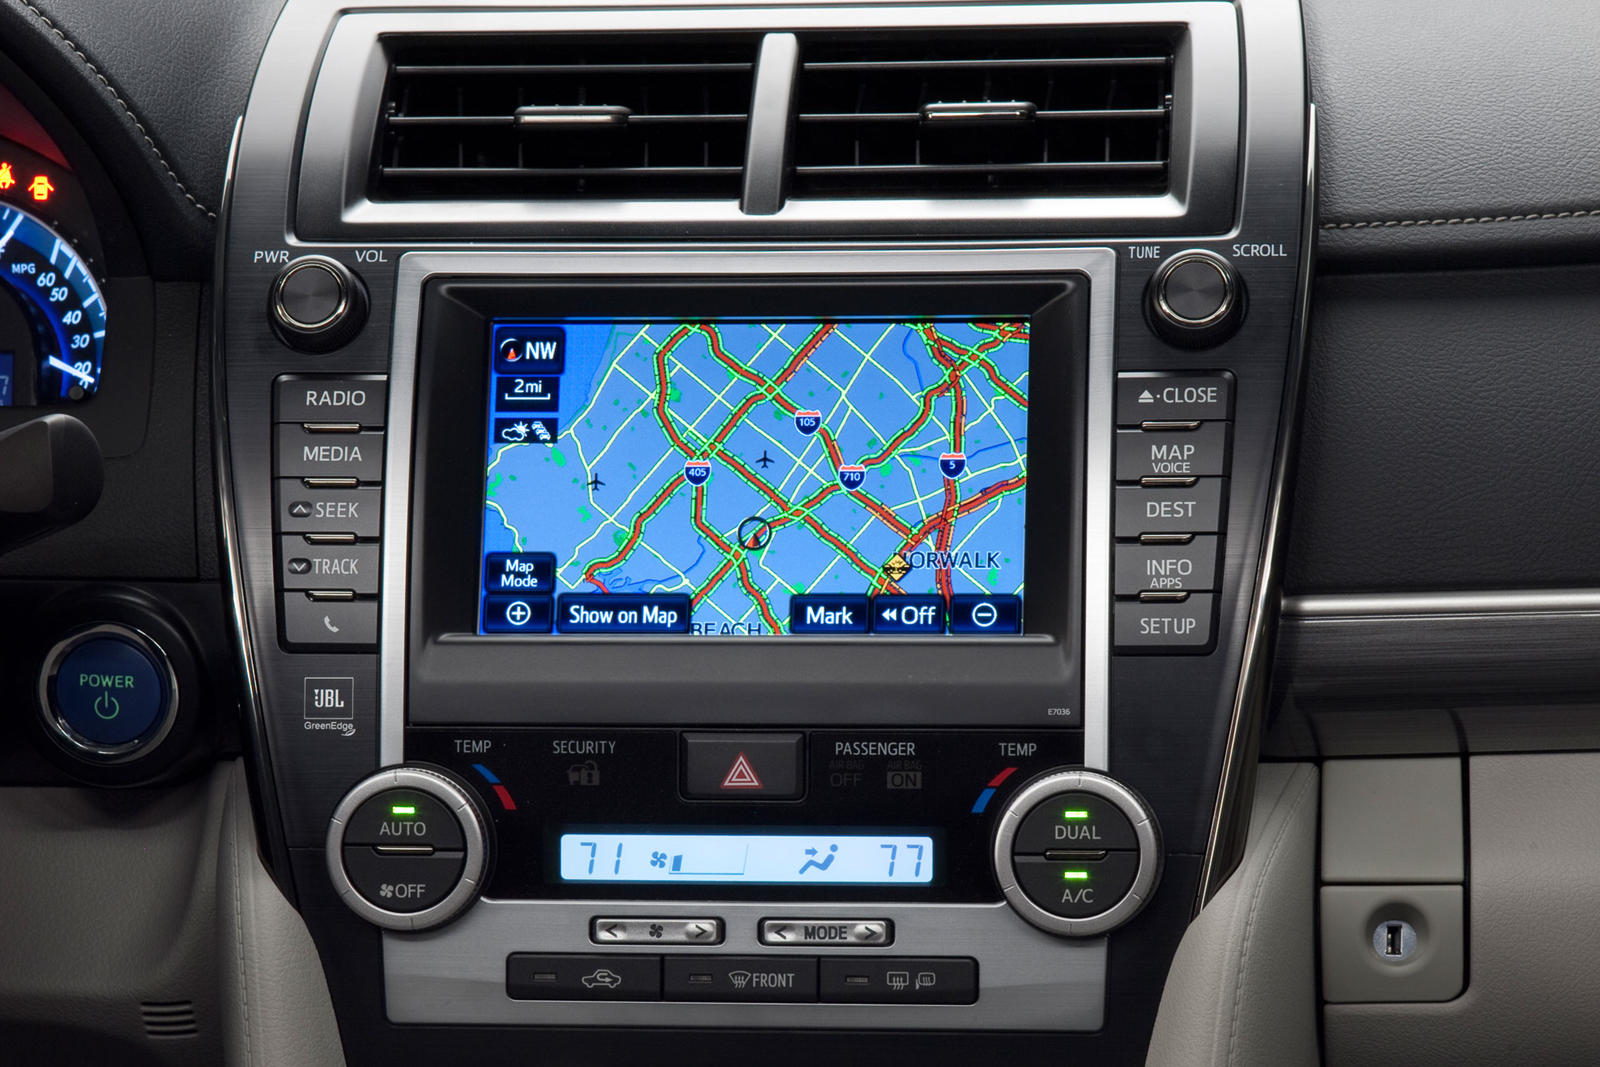 2014 Toyota Camry Hybrid Central Console Navigation System